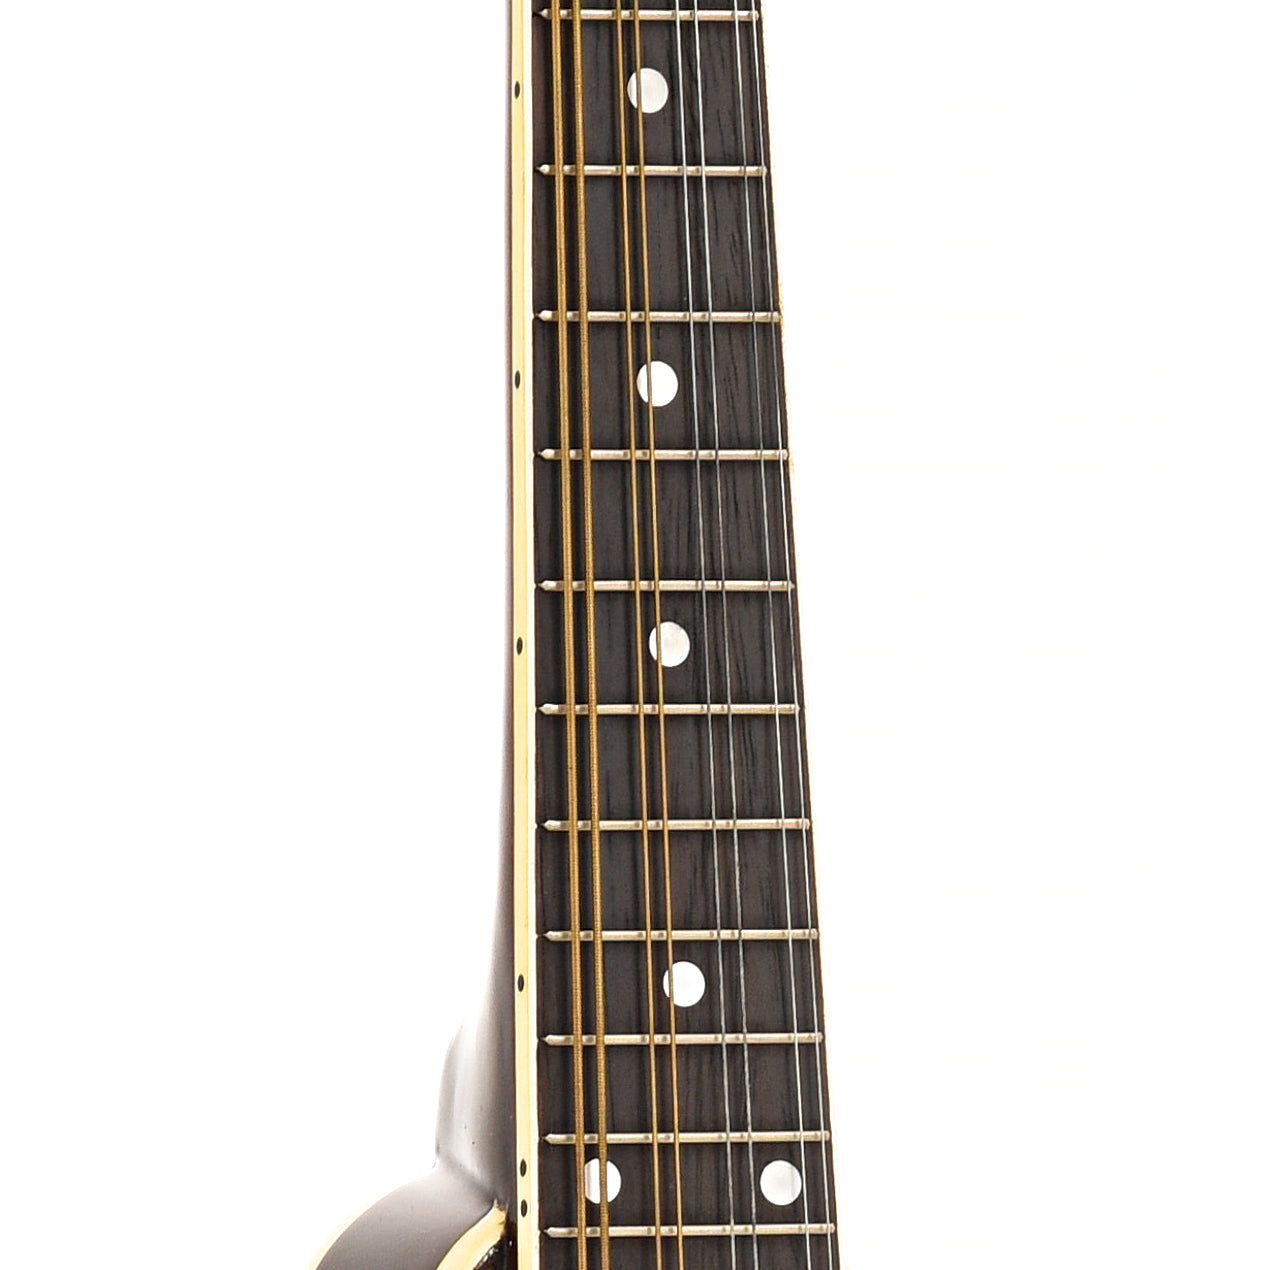 Fretboard of Kentucky KM250S mandolin